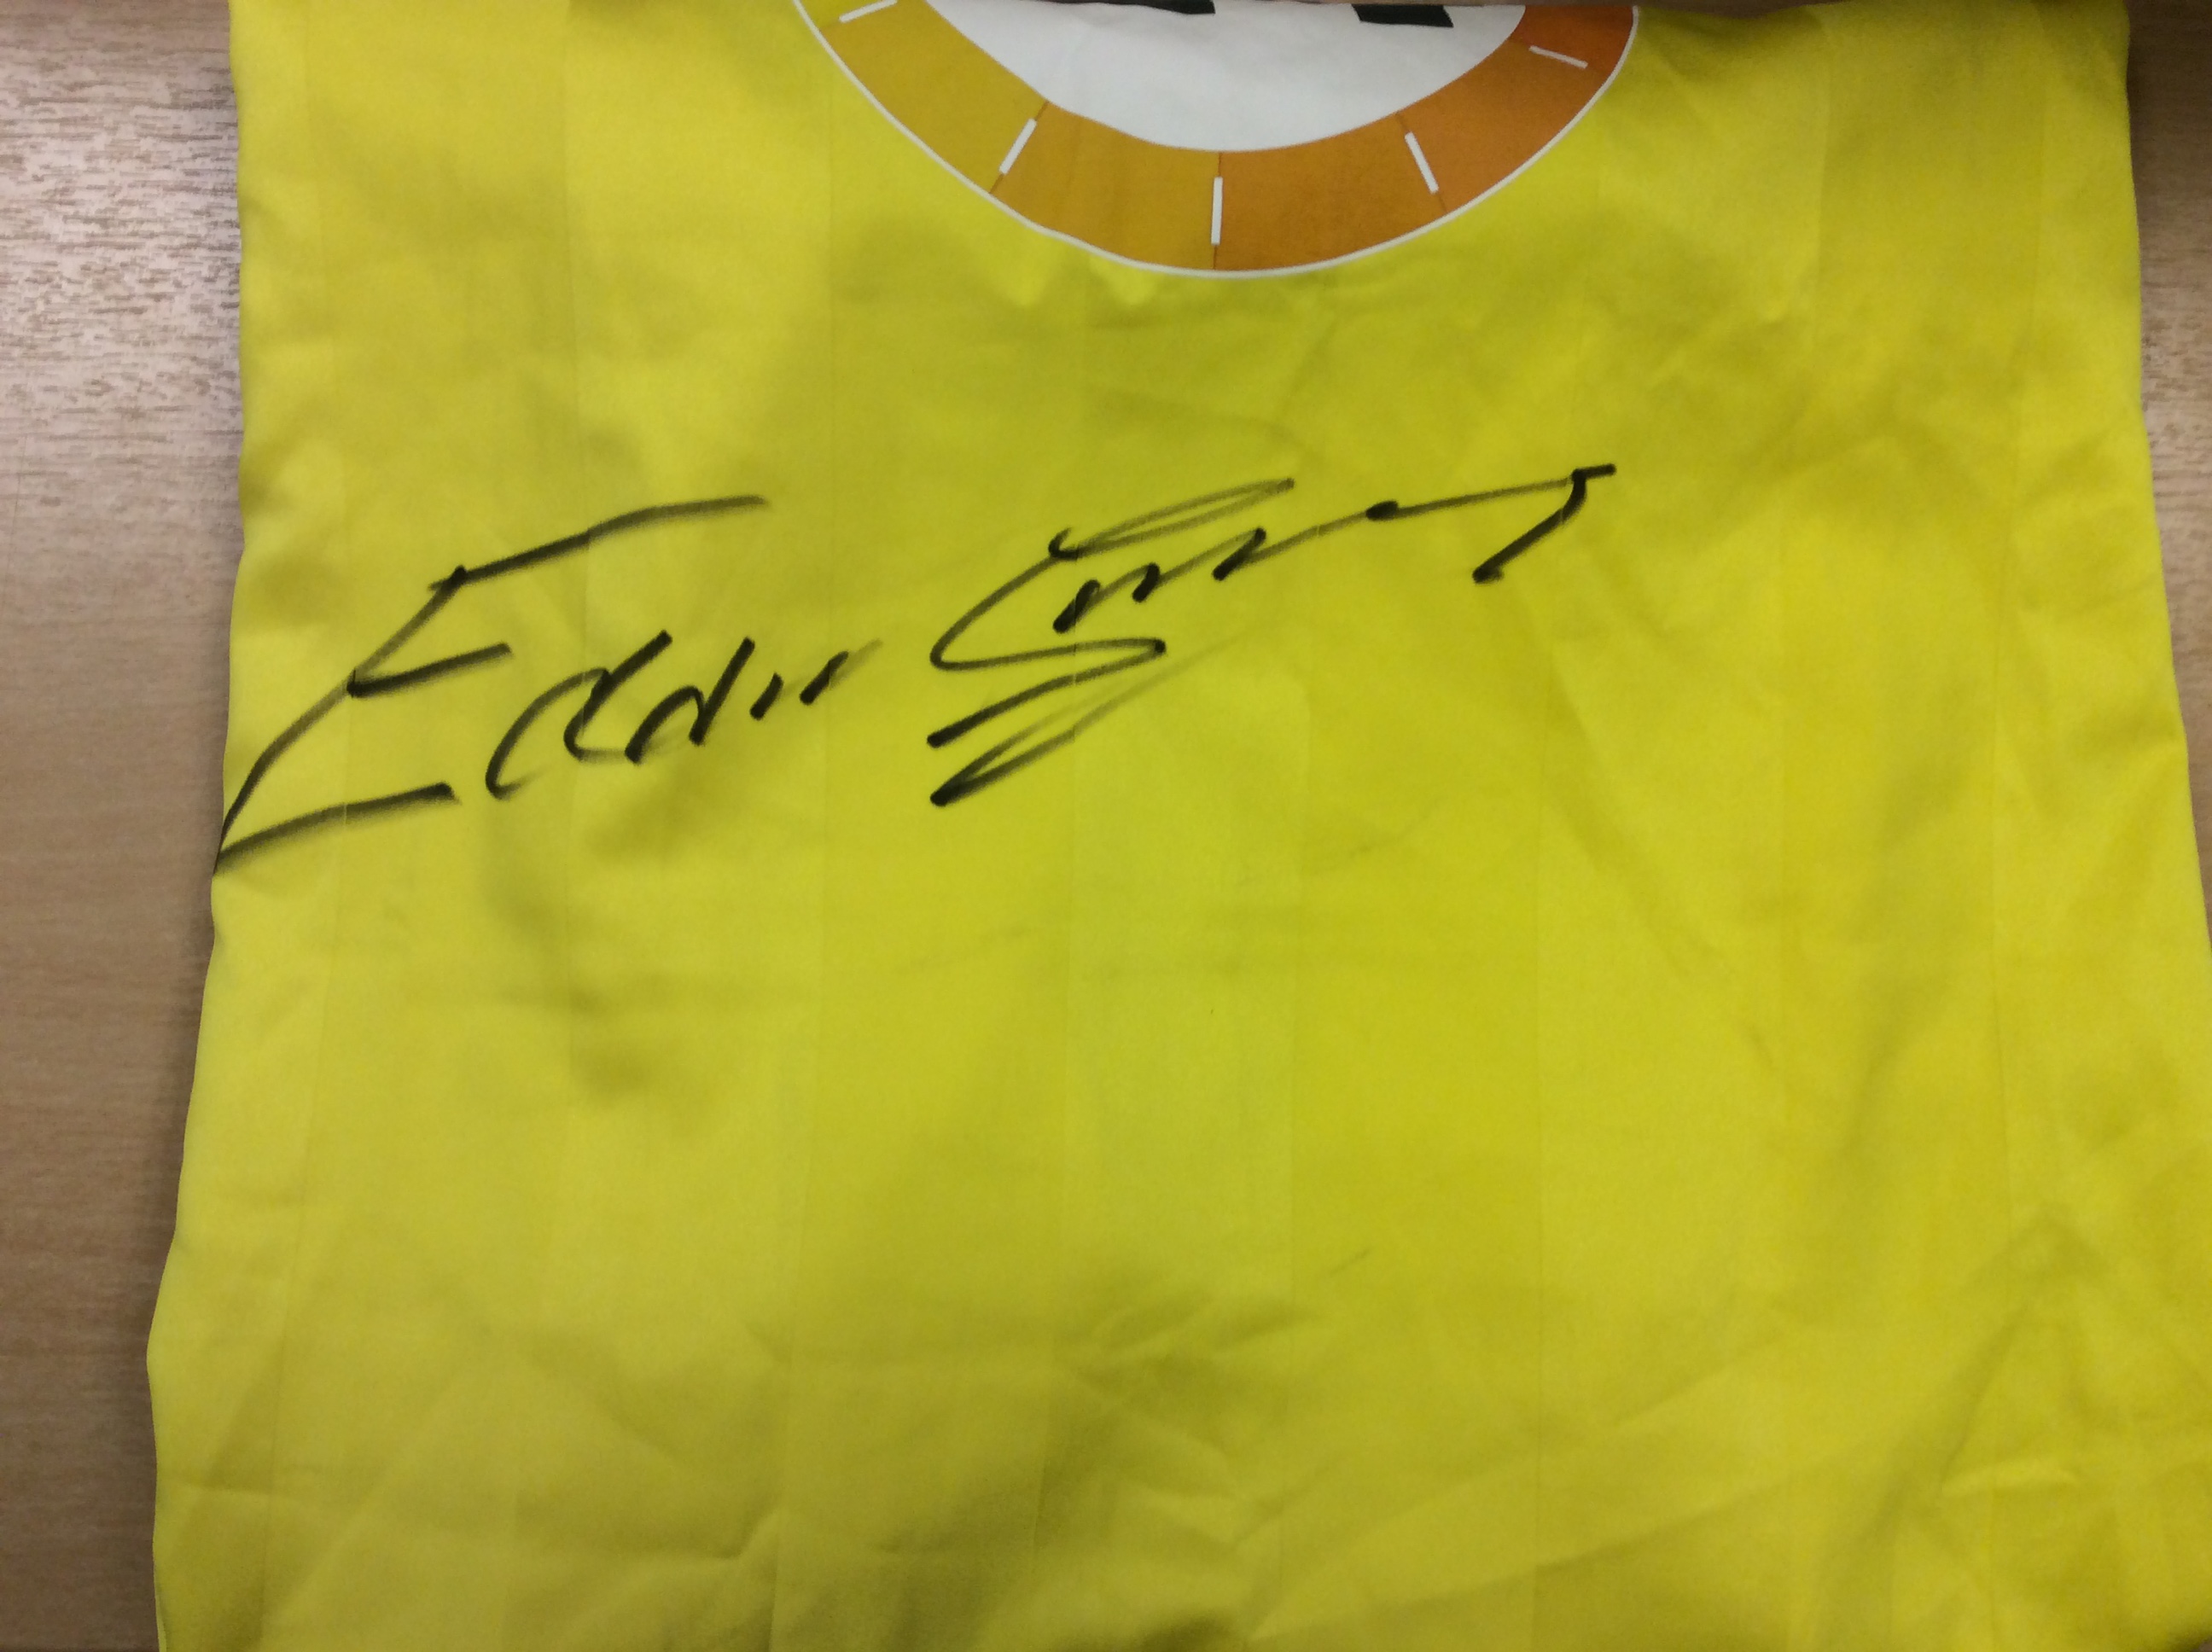 Eddie Gray Signed Leeds United Football Shirt - Image 2 of 3